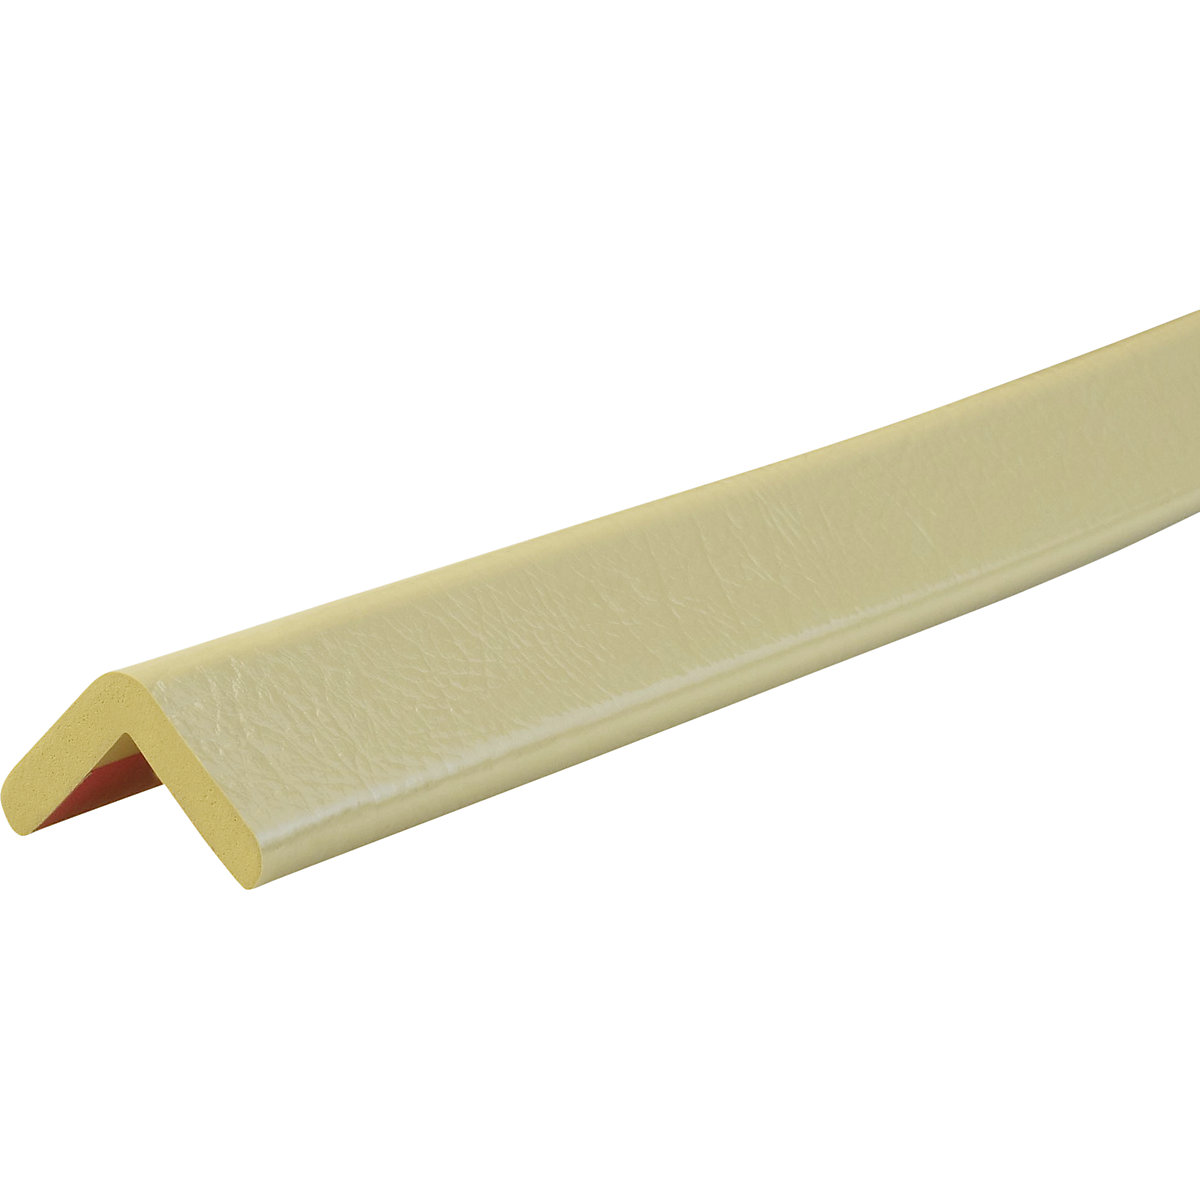 Knuffi®-hoekbescherming – SHG, type H, stuk van 1 m, beige-12